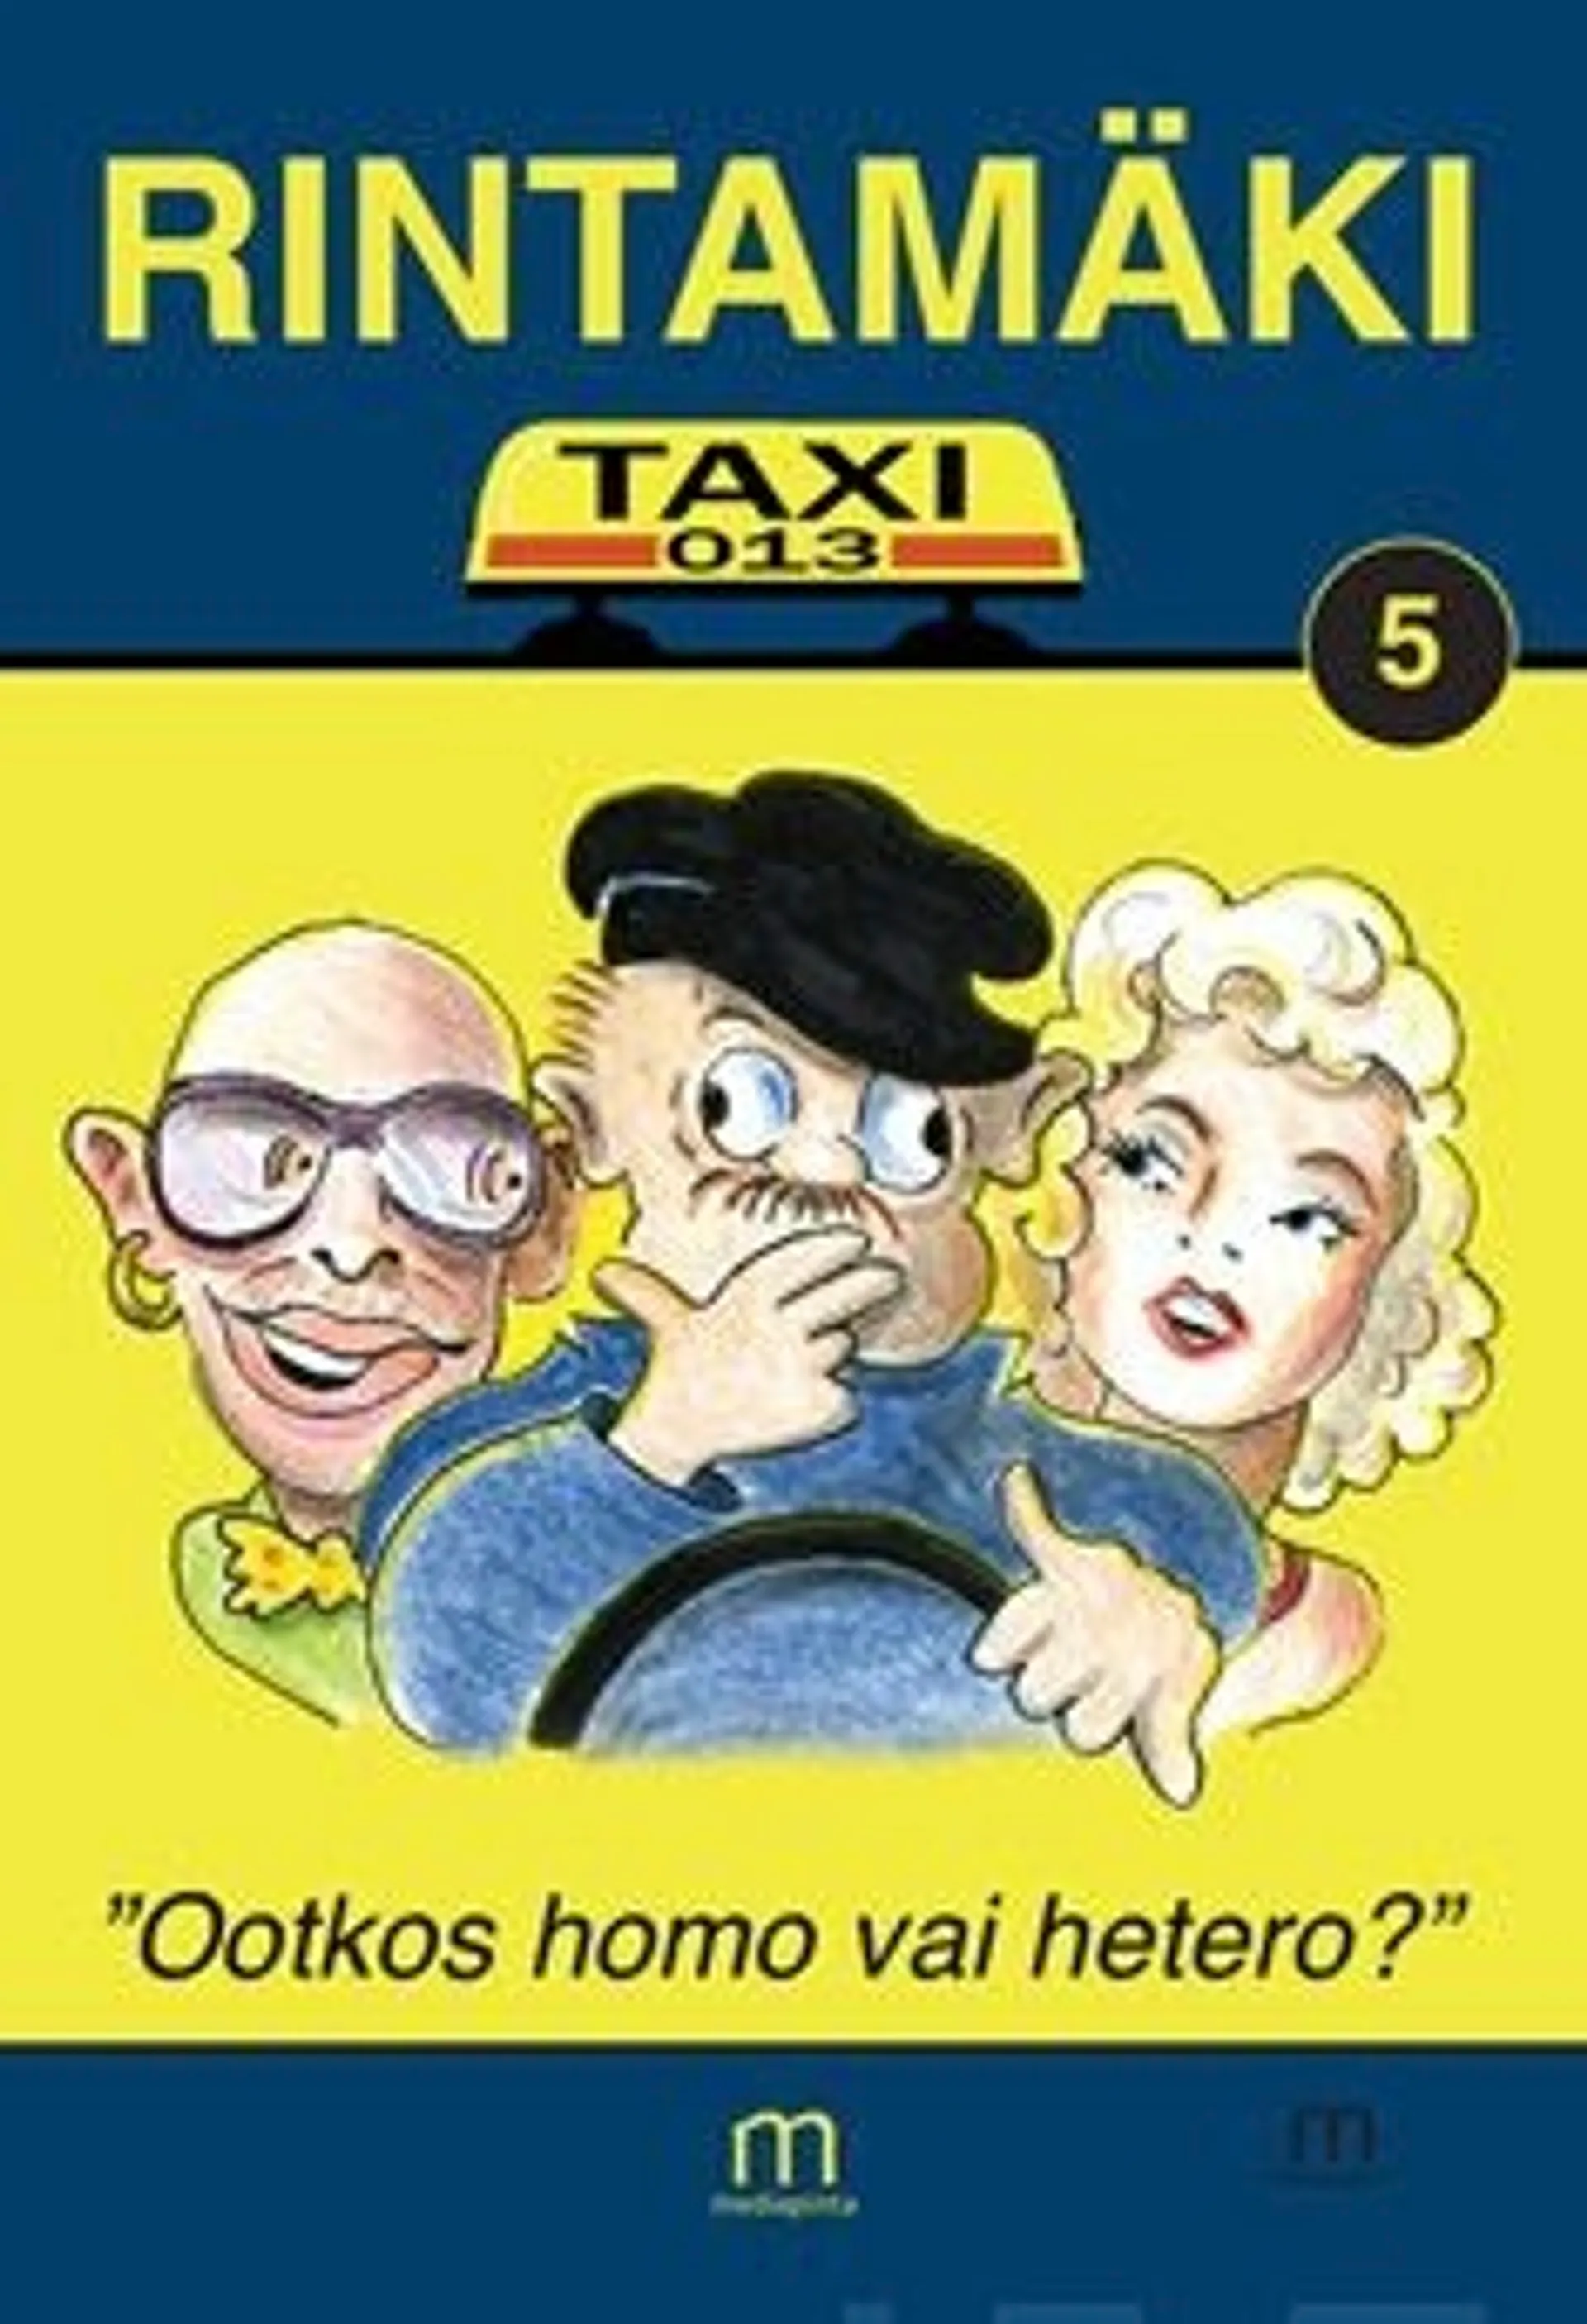 Rintamäki, Taxi-013 - "Ootkos homo vai hetero?"